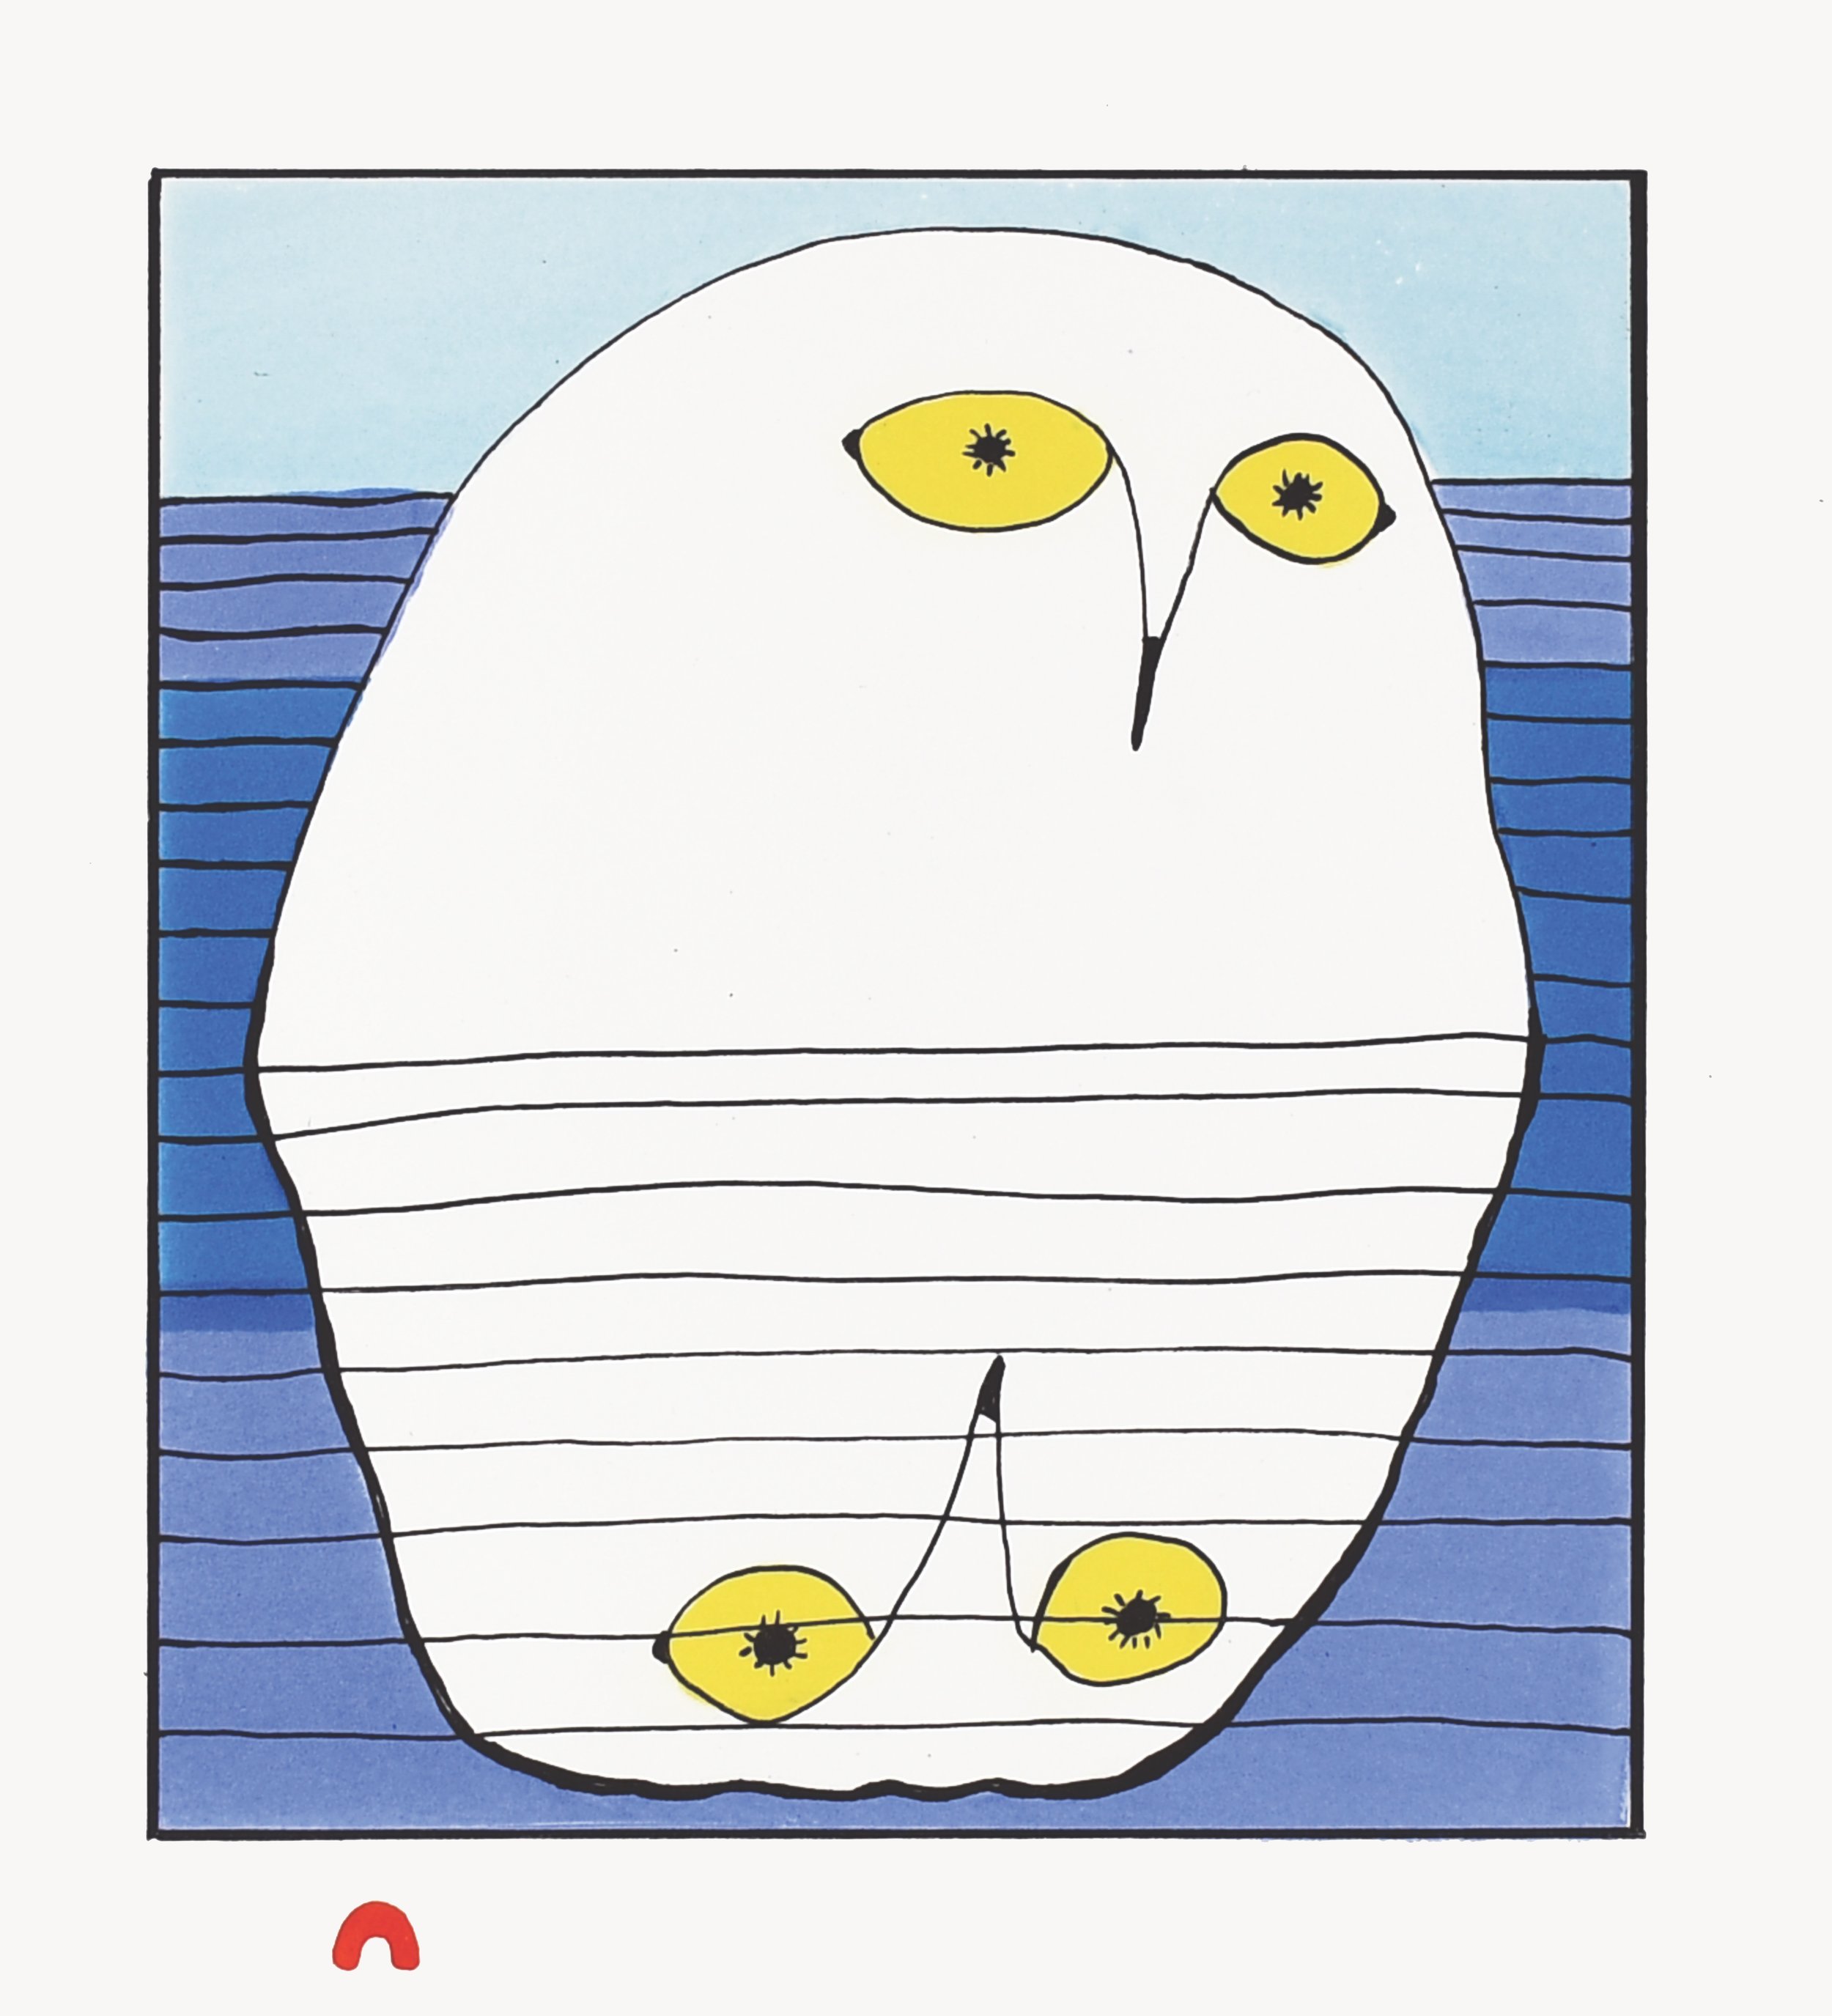 NINGIUKULU TEEVEE
3. Owl’s Reflection
Lithograph
Paper: BFK White
Printer: Nujalia Quvianaqtuliaq
28 x 25.5 cm 
11” x 10”
$ 500
$400